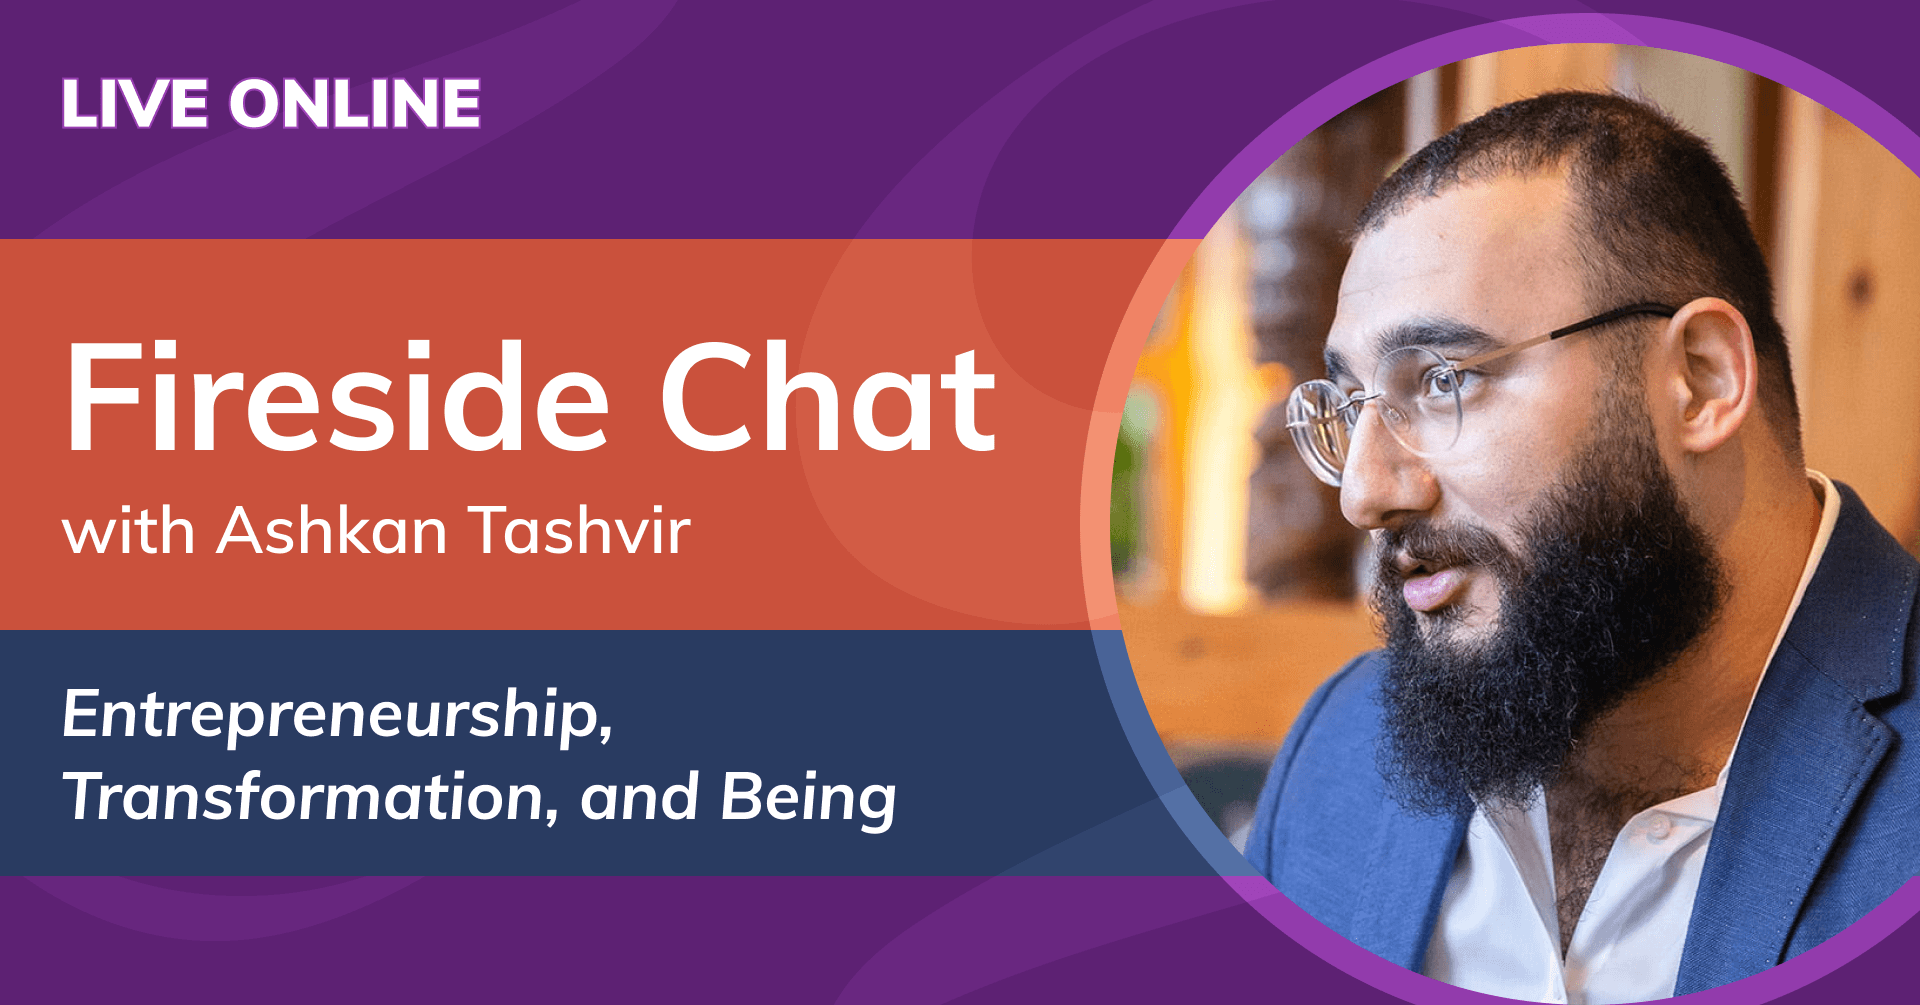 Fireside Chat with Ashkan Tashvir: Entrepreneurship, Transformation, and Being